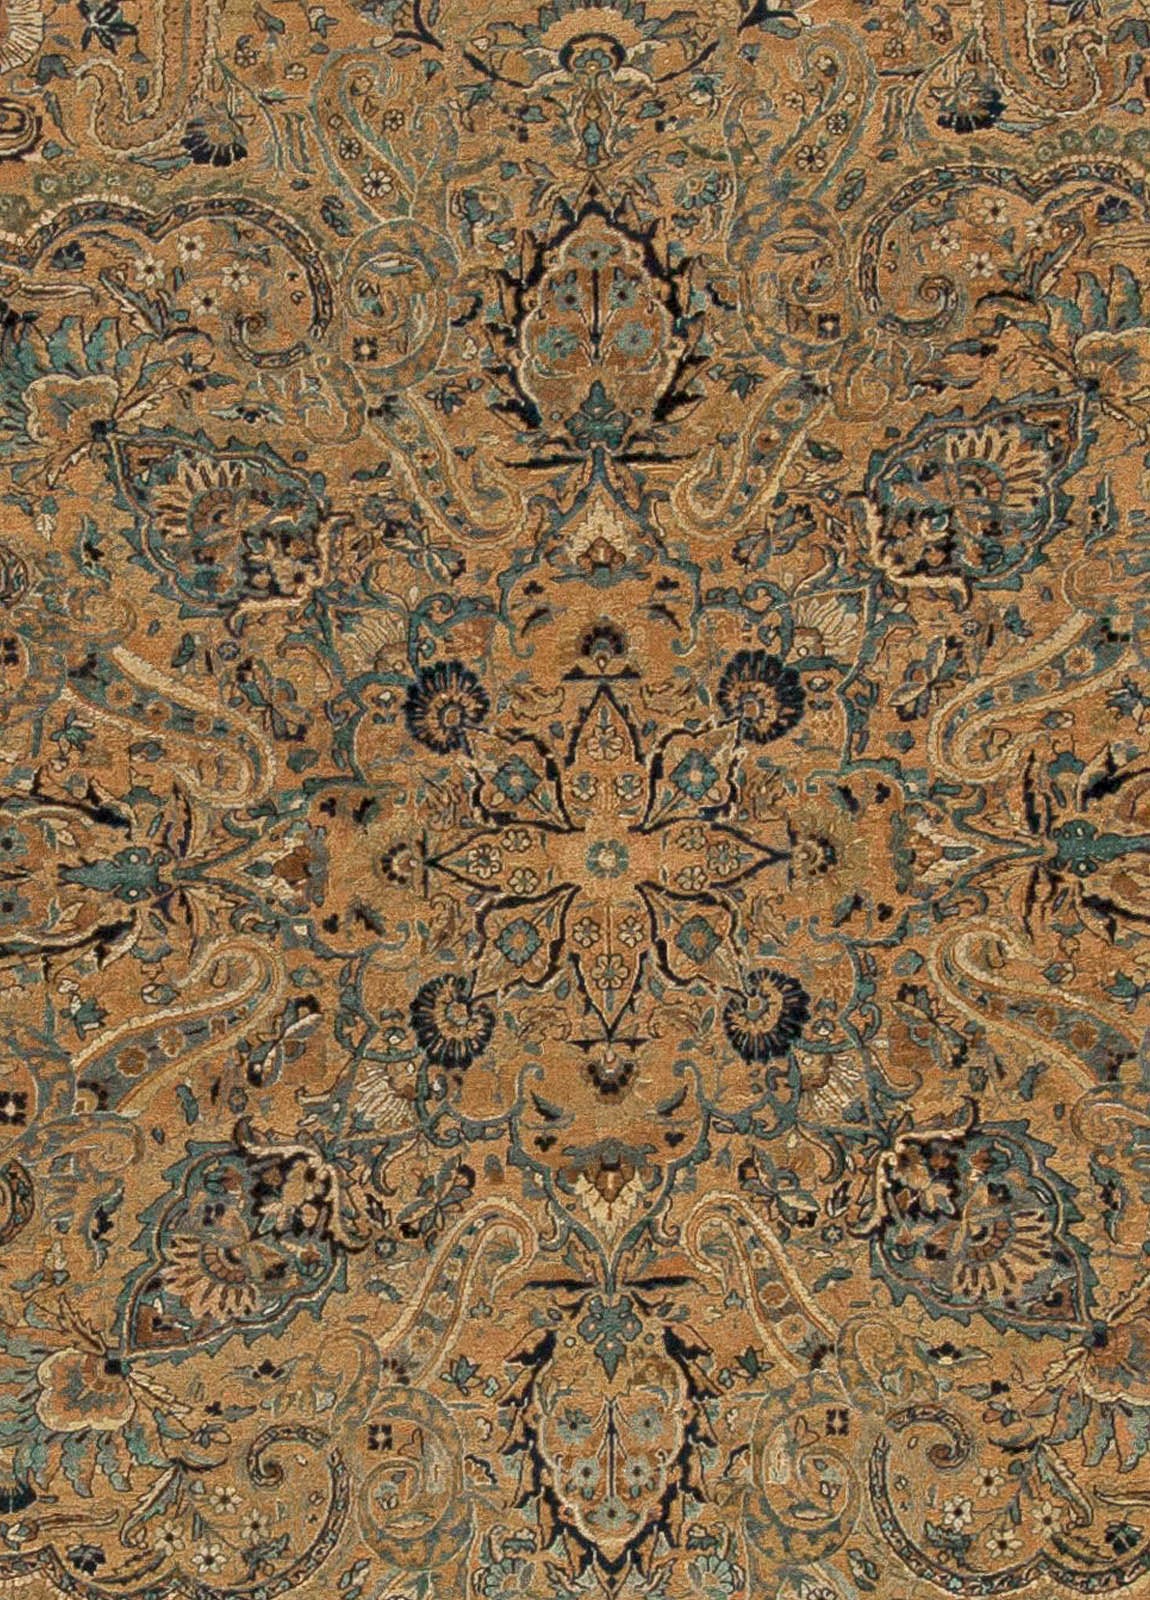 Antique Persian Kirman handmade wool rug
Size: 13'9